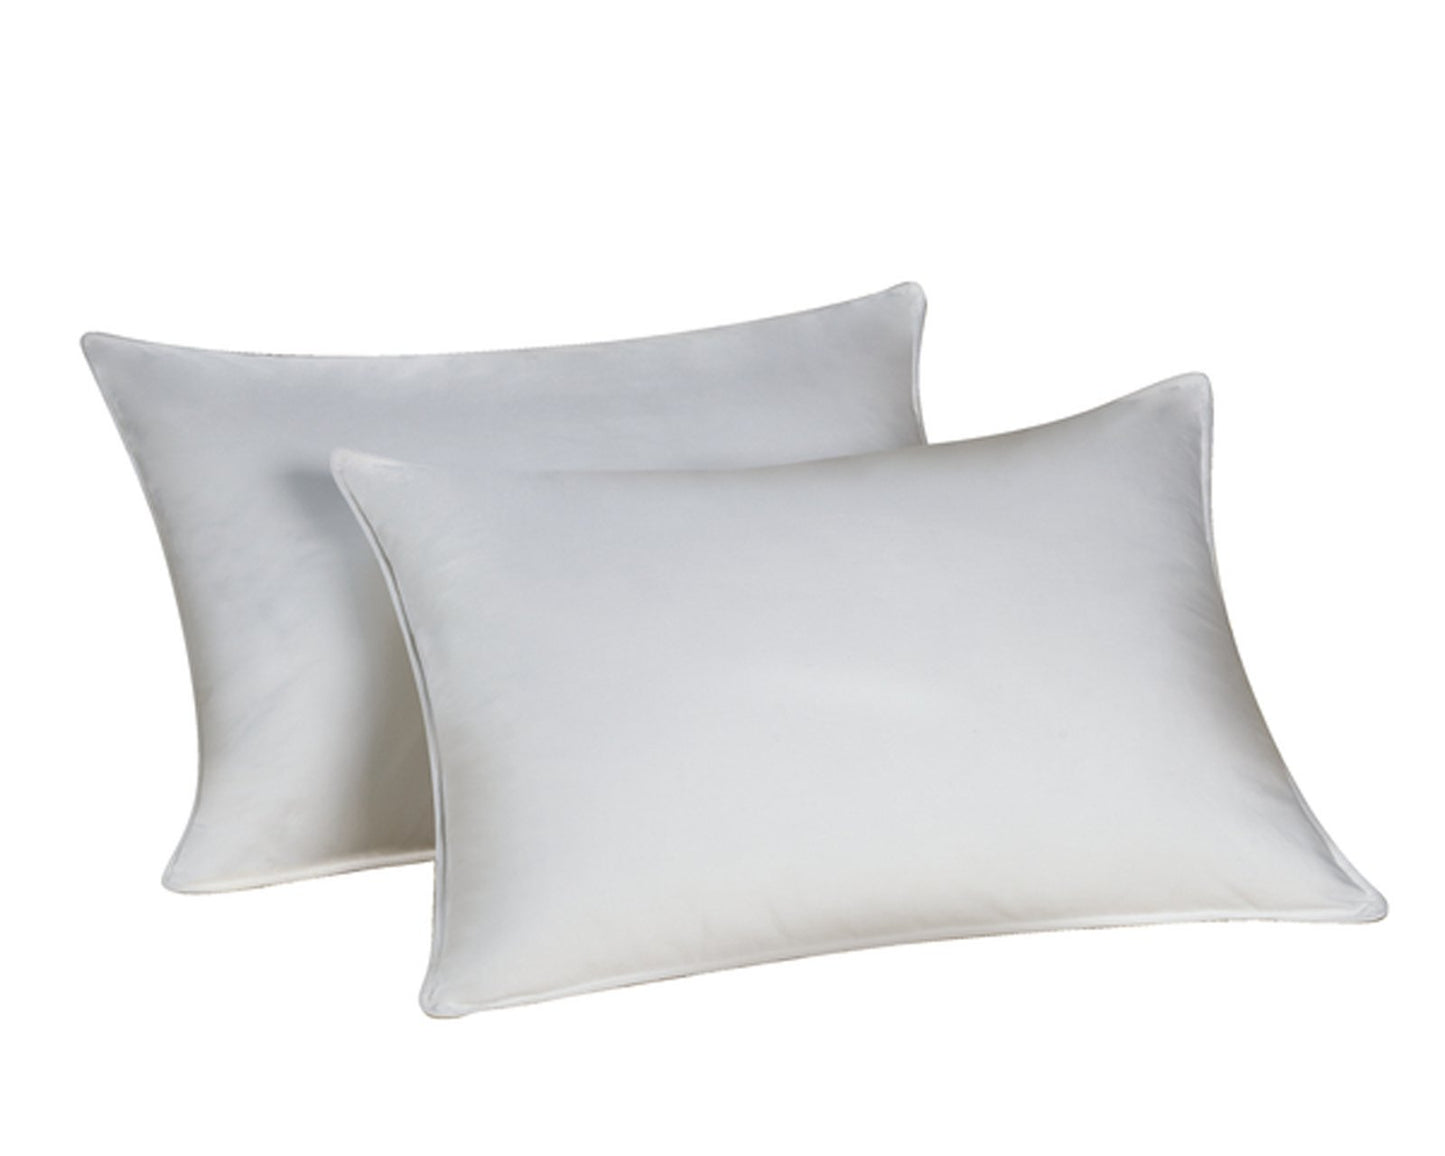 Envirosleep Resiloft King Pillow Set of 2 Featured at Many Hotels